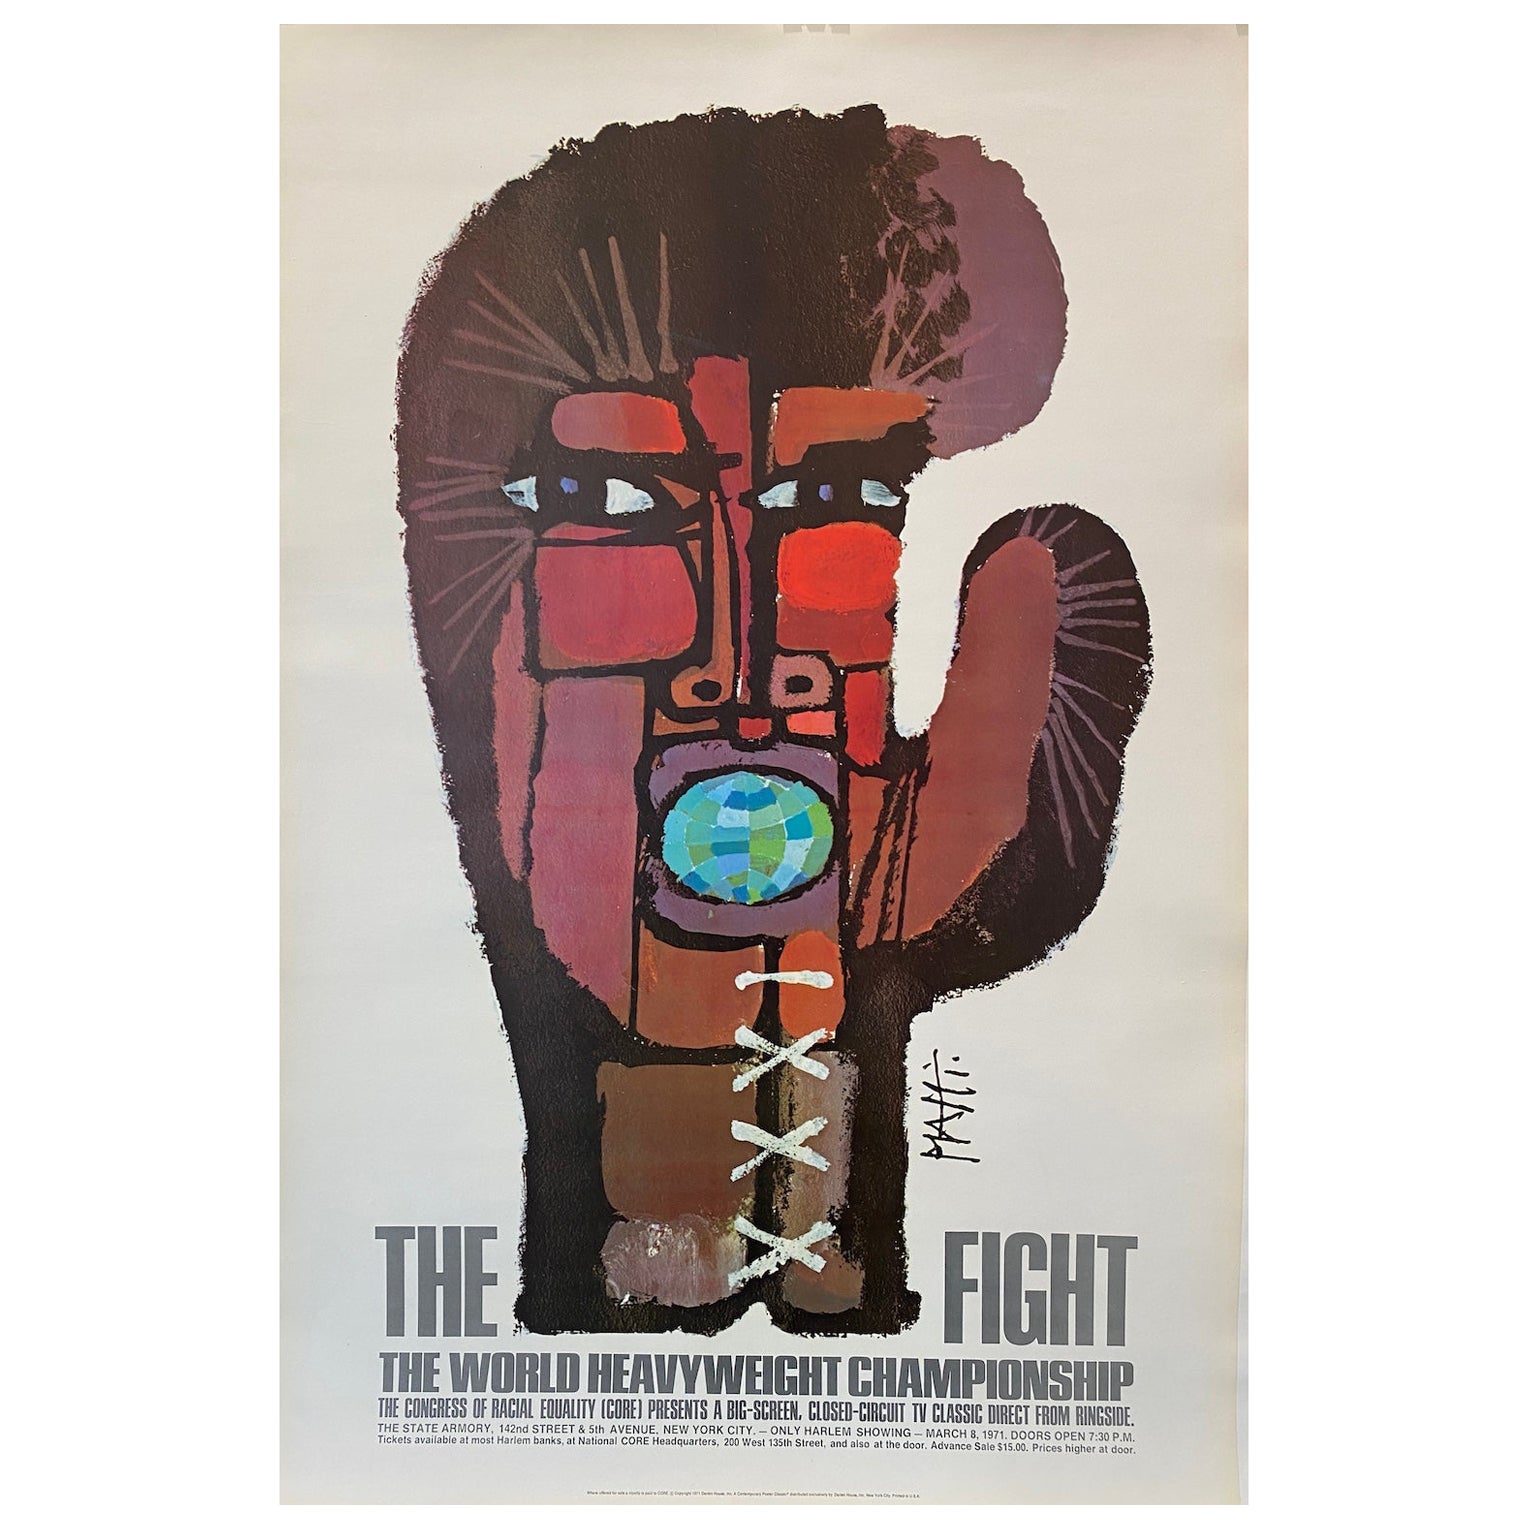 Muhammad Ali 'THE WORLD HEAVYWEIGHT CHAMPIONSHIP' Original Vintage Poster, 1971 For Sale